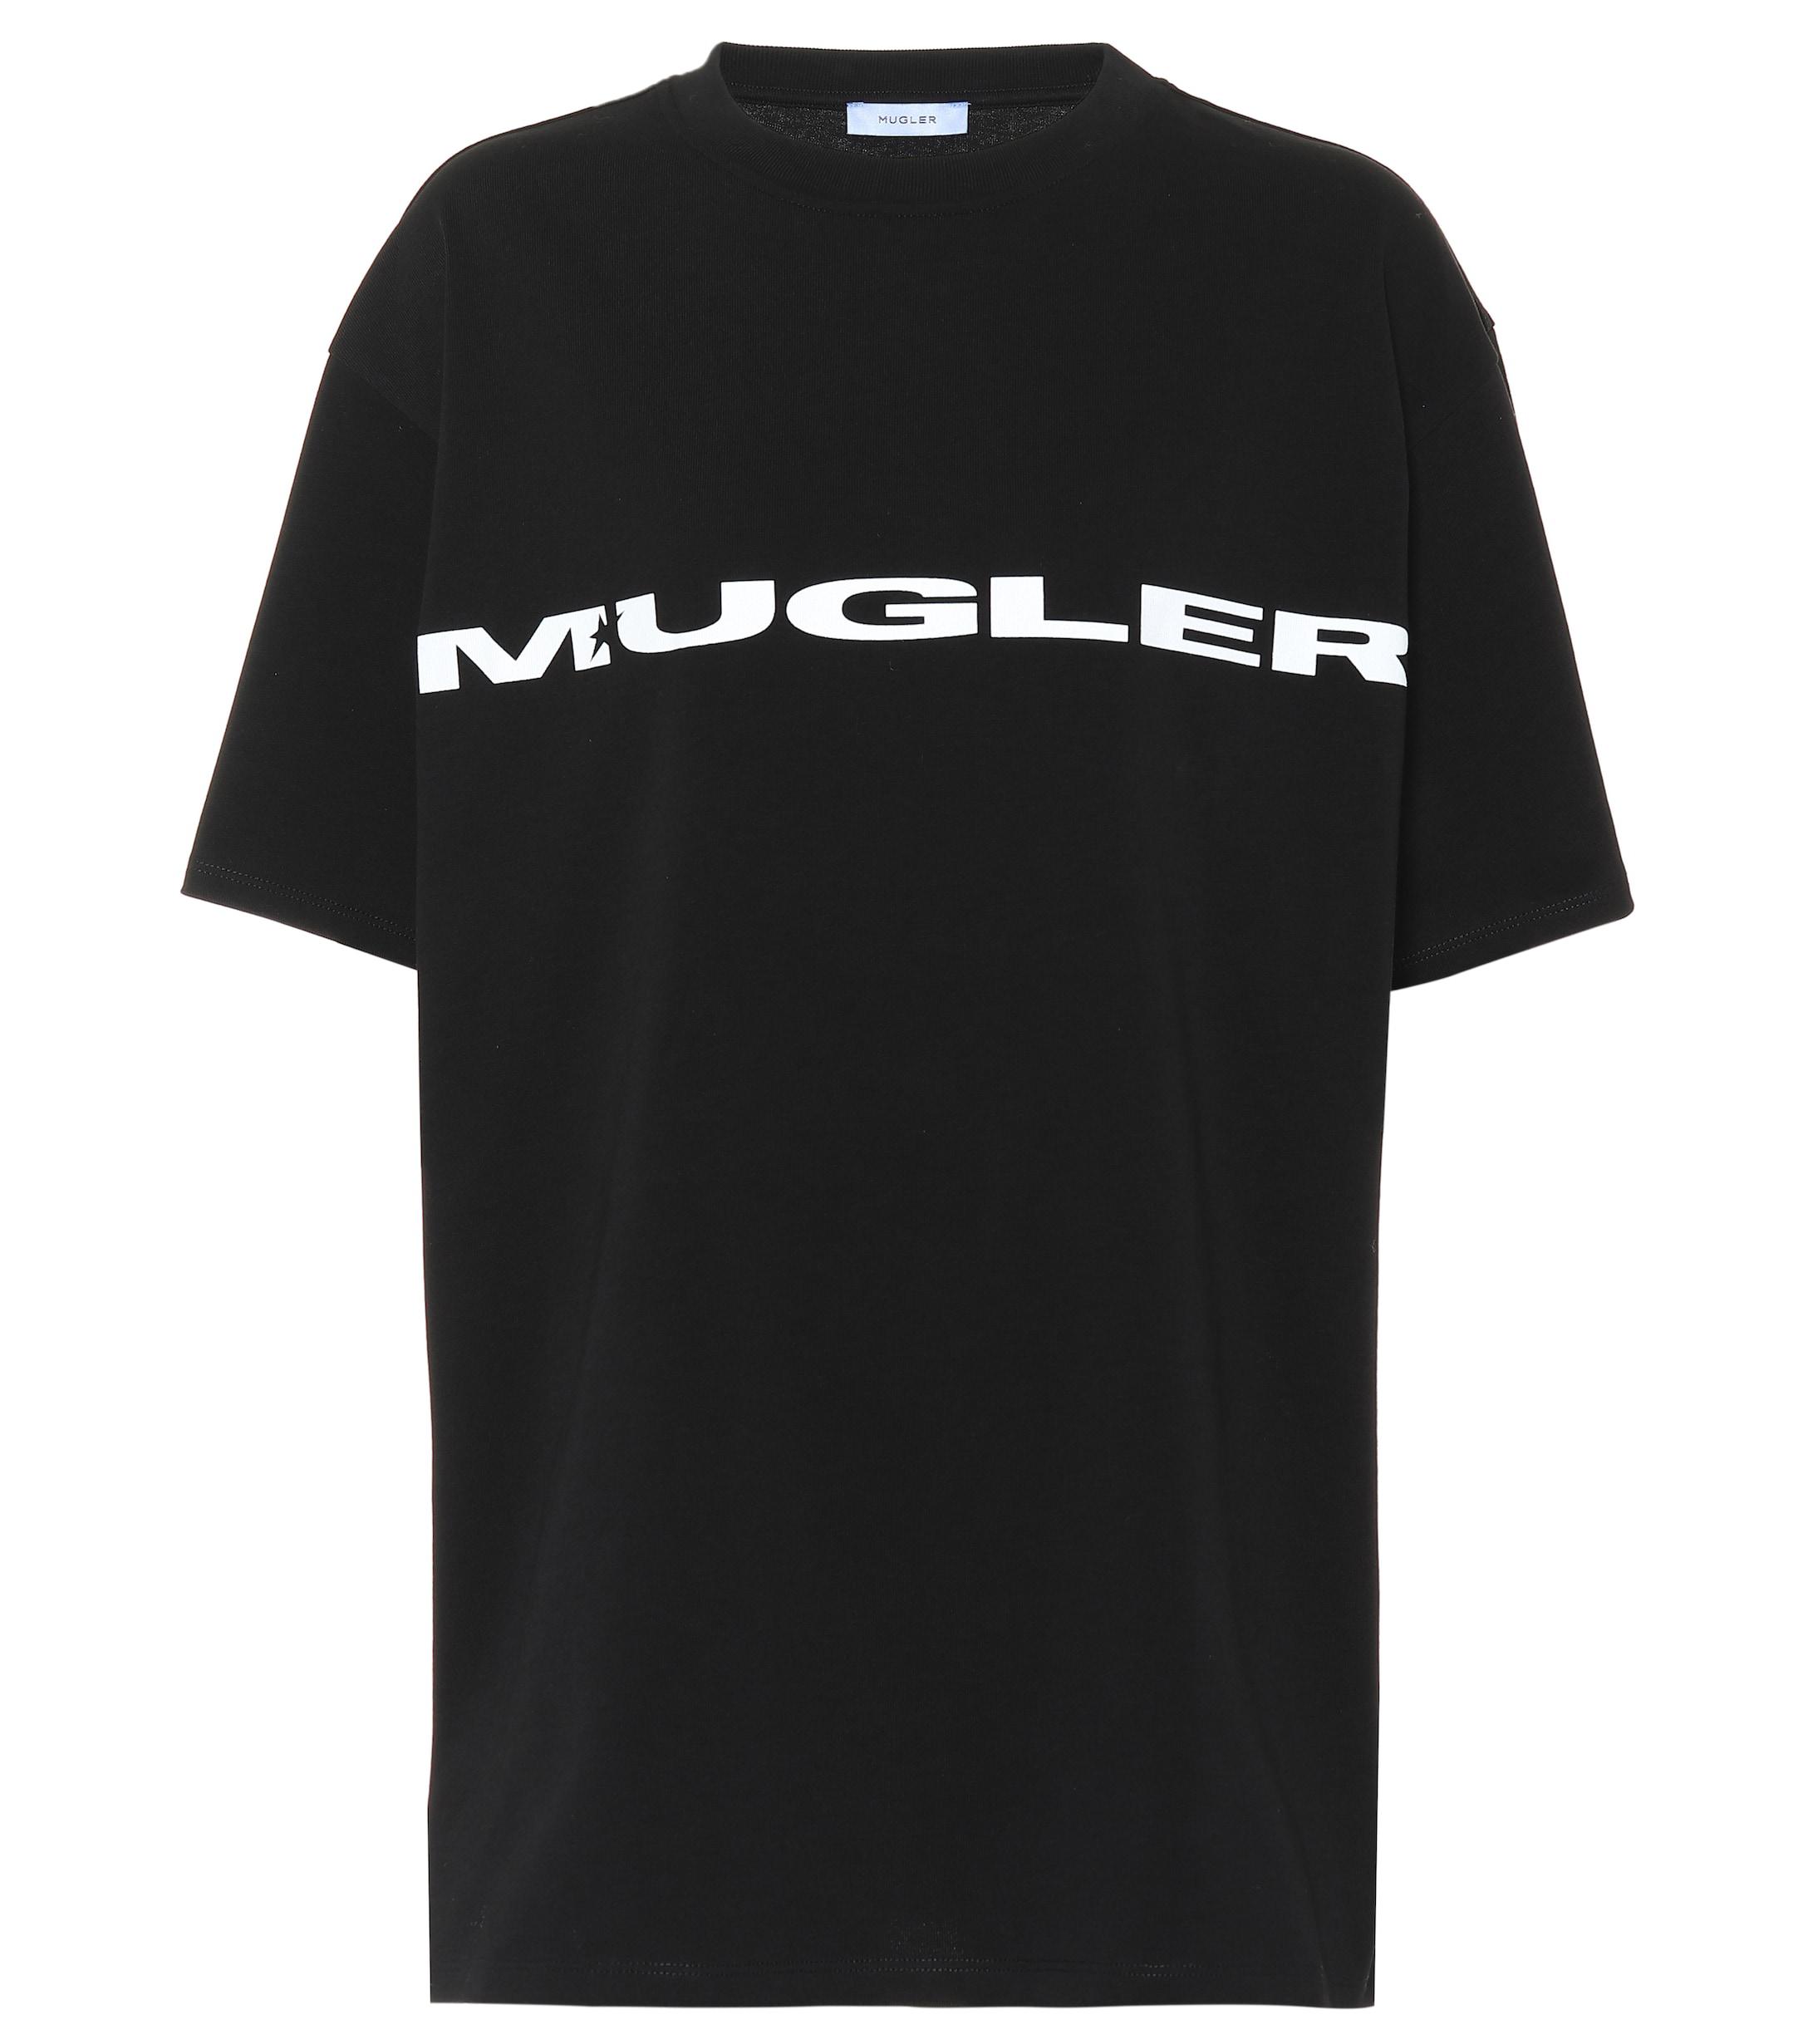 Mugler Printed Cotton T-shirt in Black - Lyst